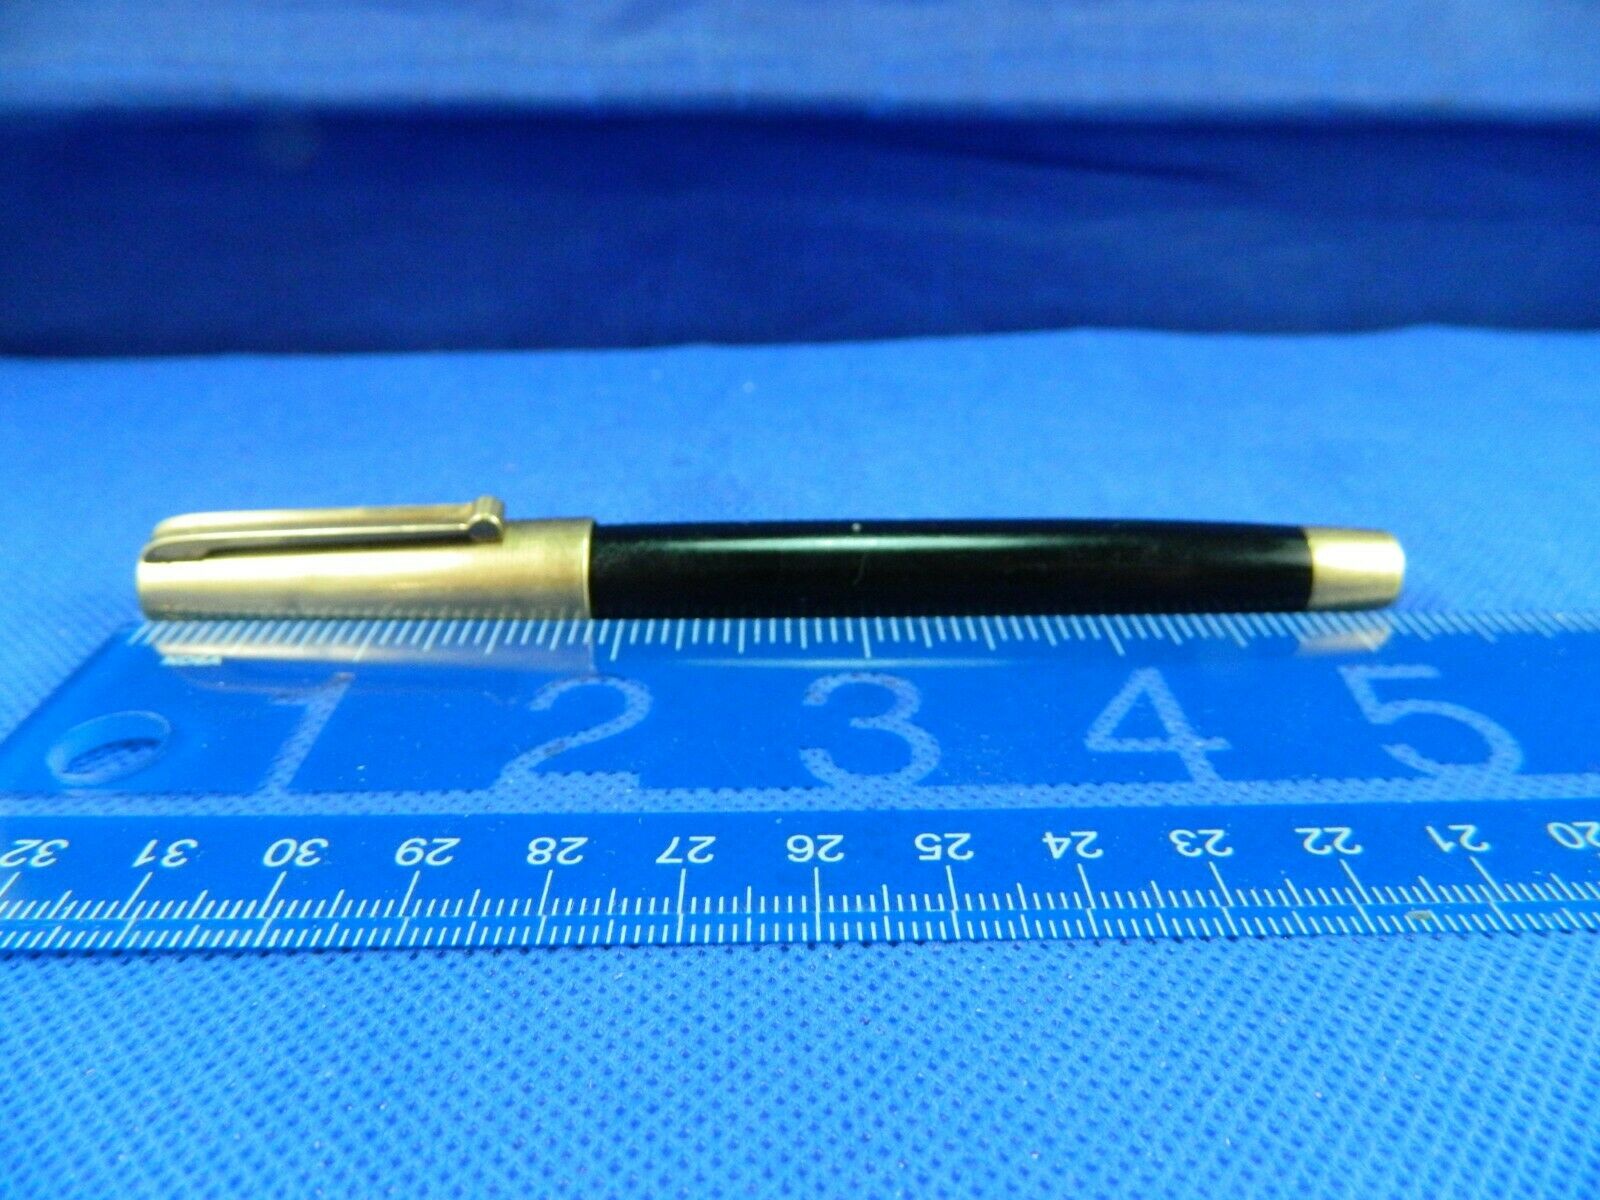 Eversharp 5th Avenue  5.25" Size Ball Point Pen - Gfm Cap - Needs Ink Cartridge